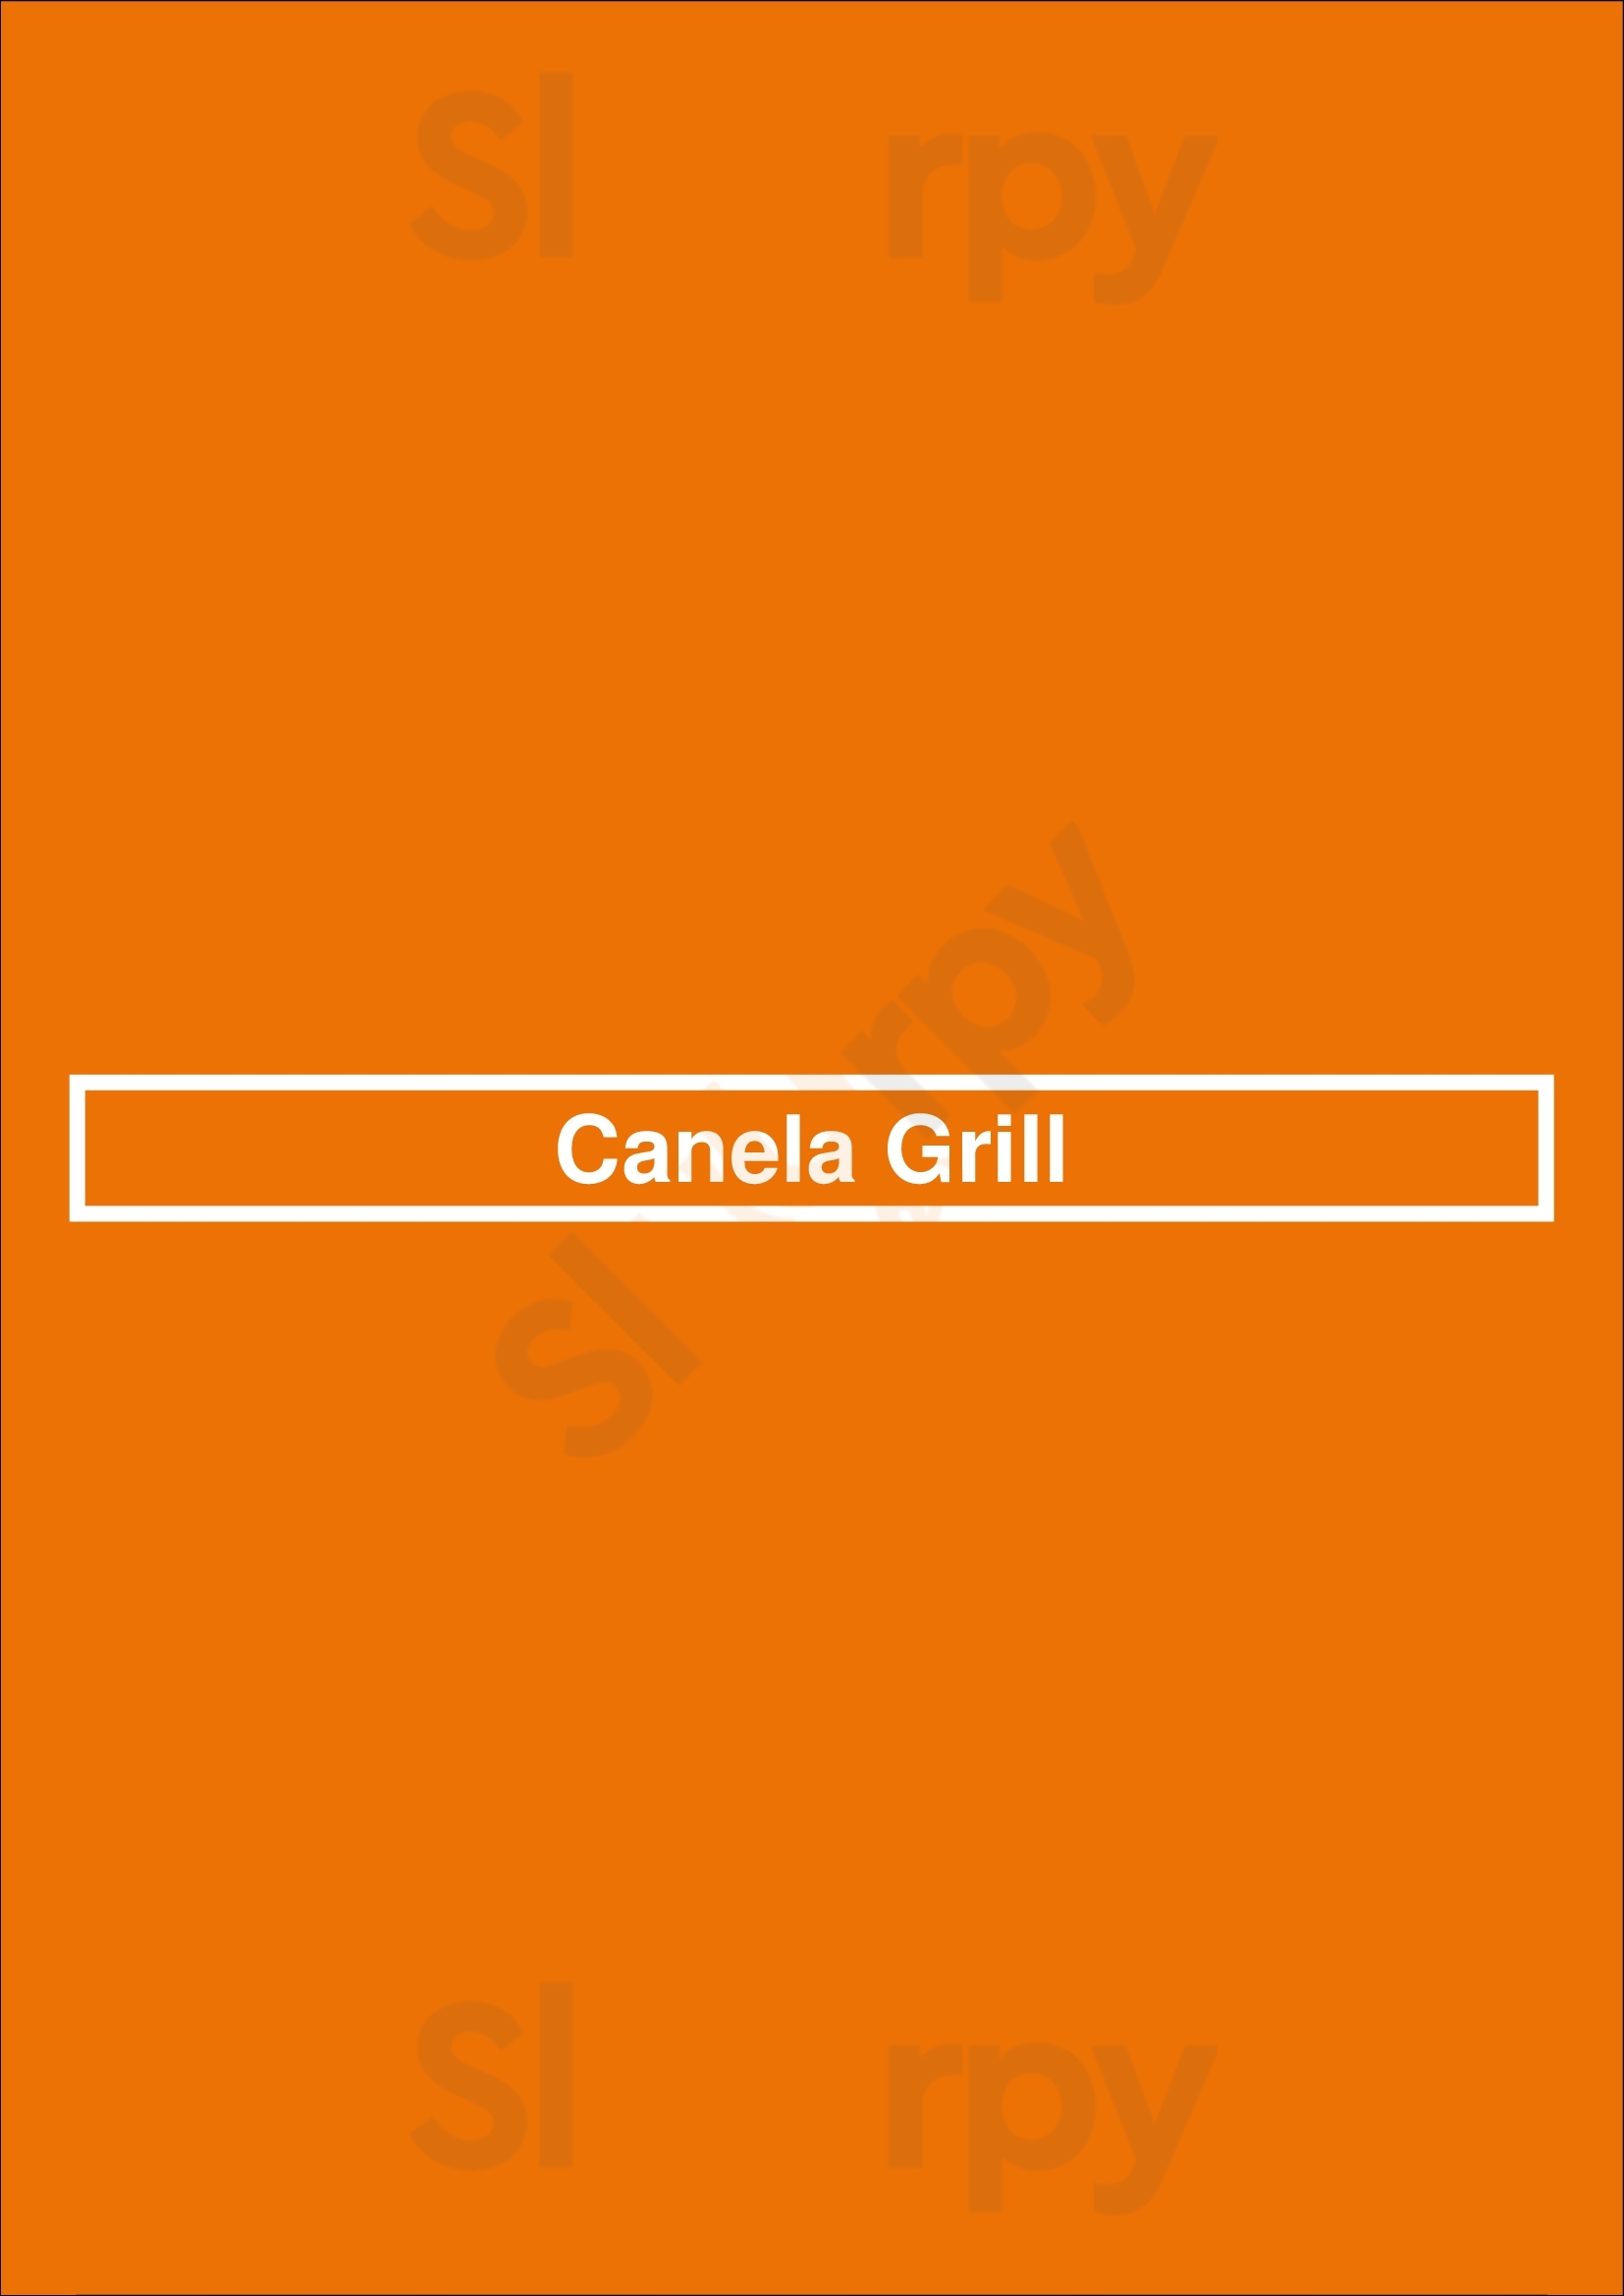 Canela Grill Lisboa Menu - 1